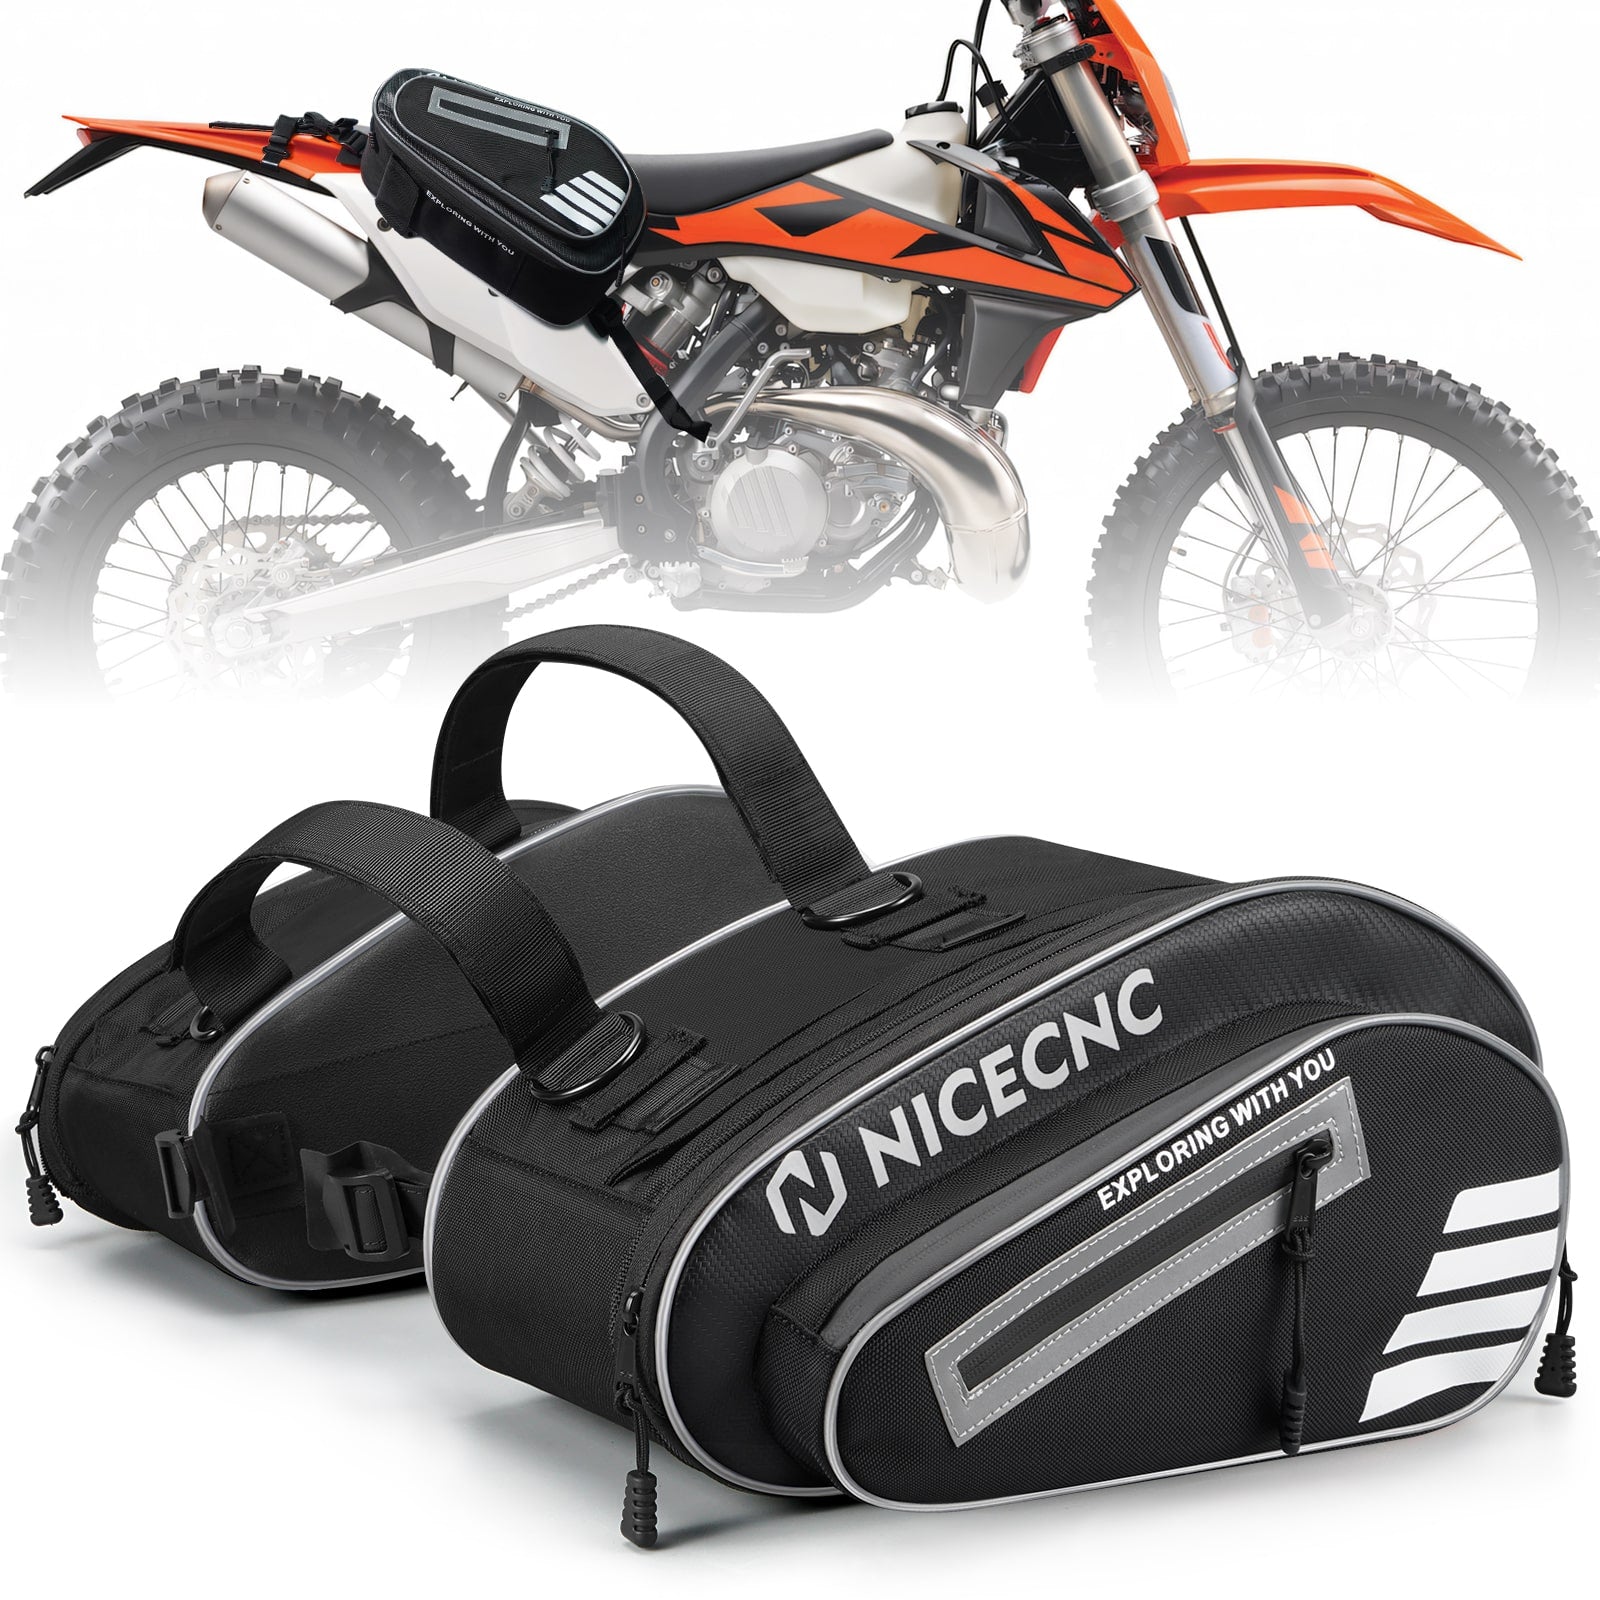 Universal Motorcycle Saddlebags 36L Large Capacity Multiple Pockets